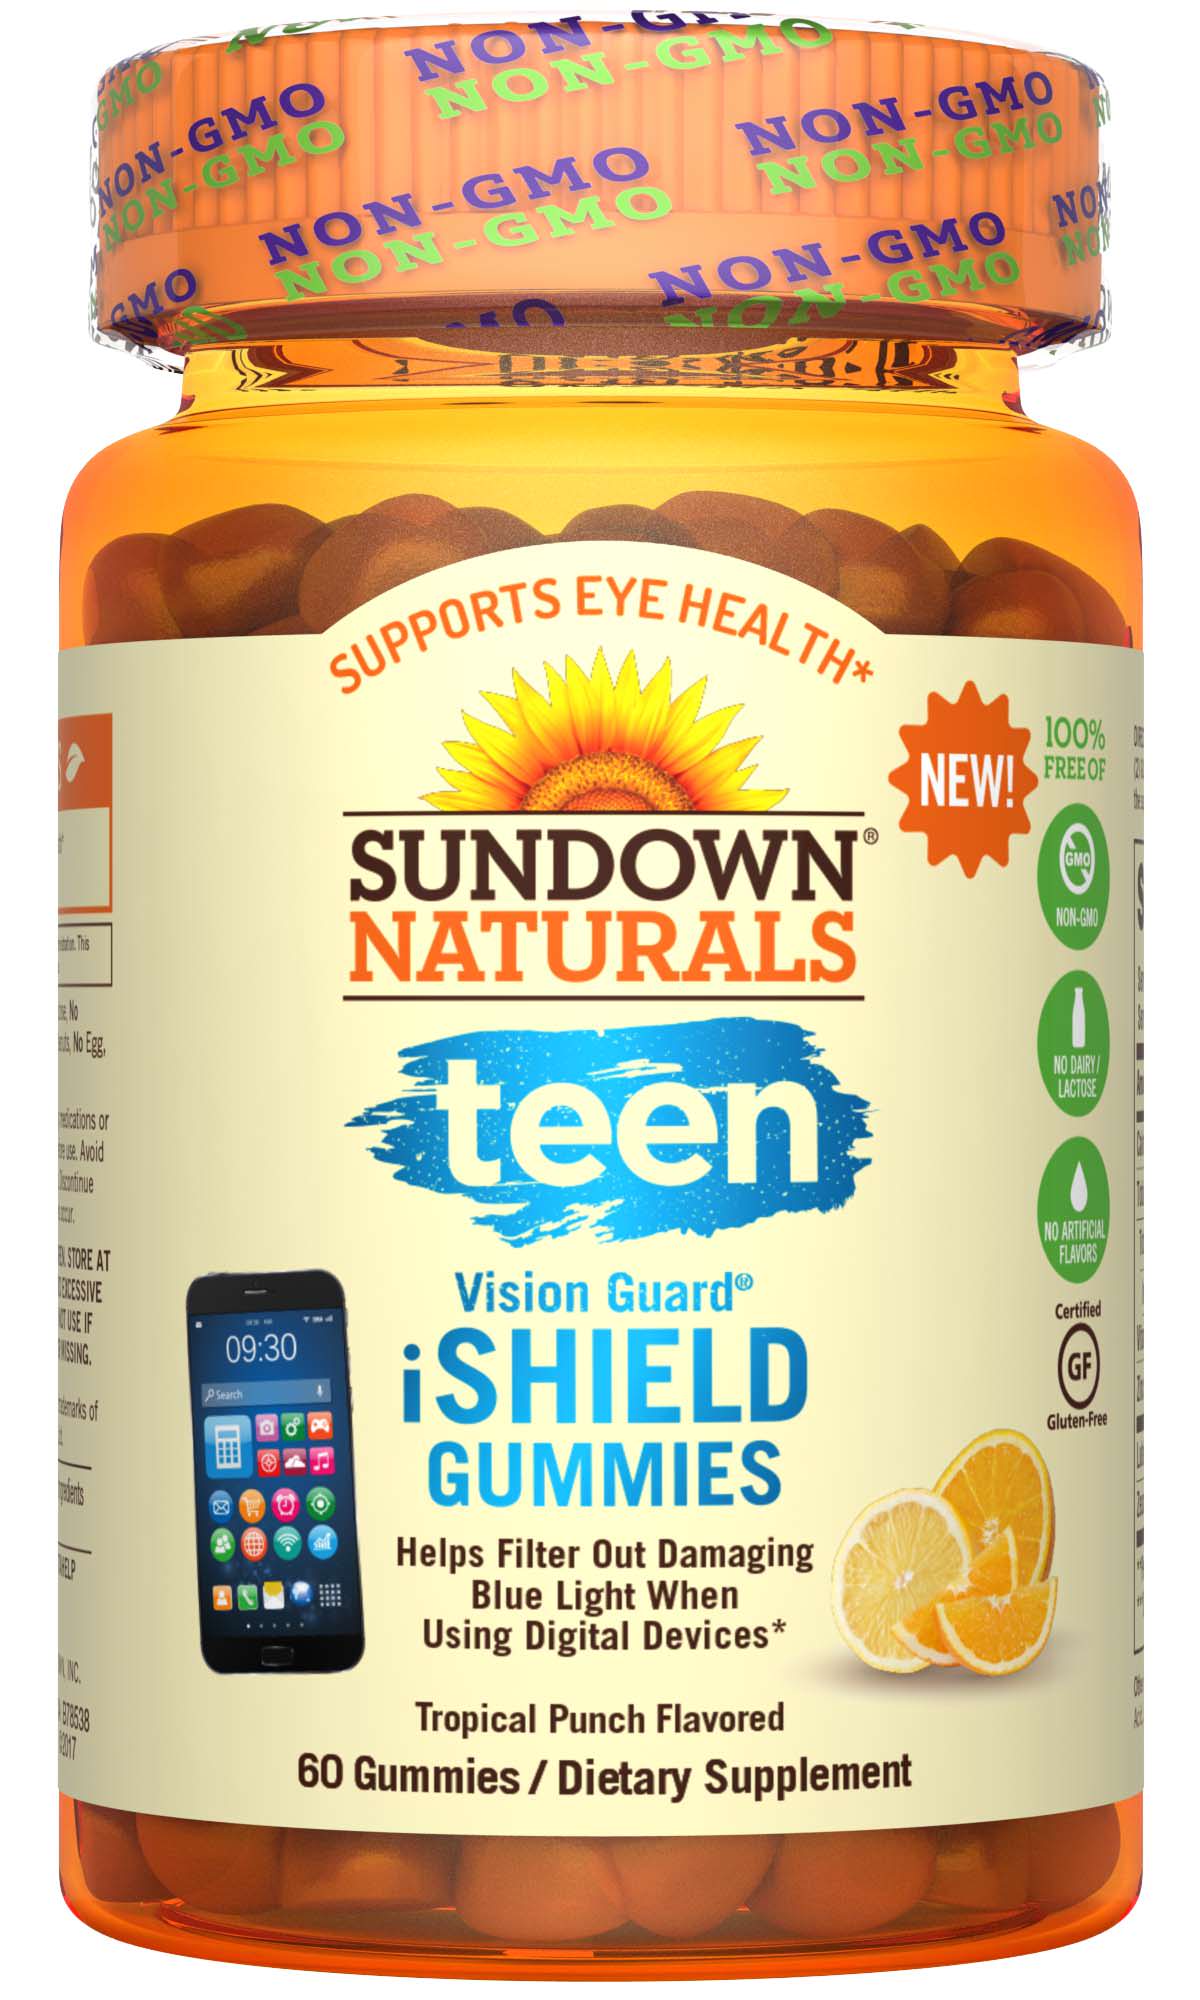 Sundown Naturals Teen Vision Guard iShield Gummies, 60 Count